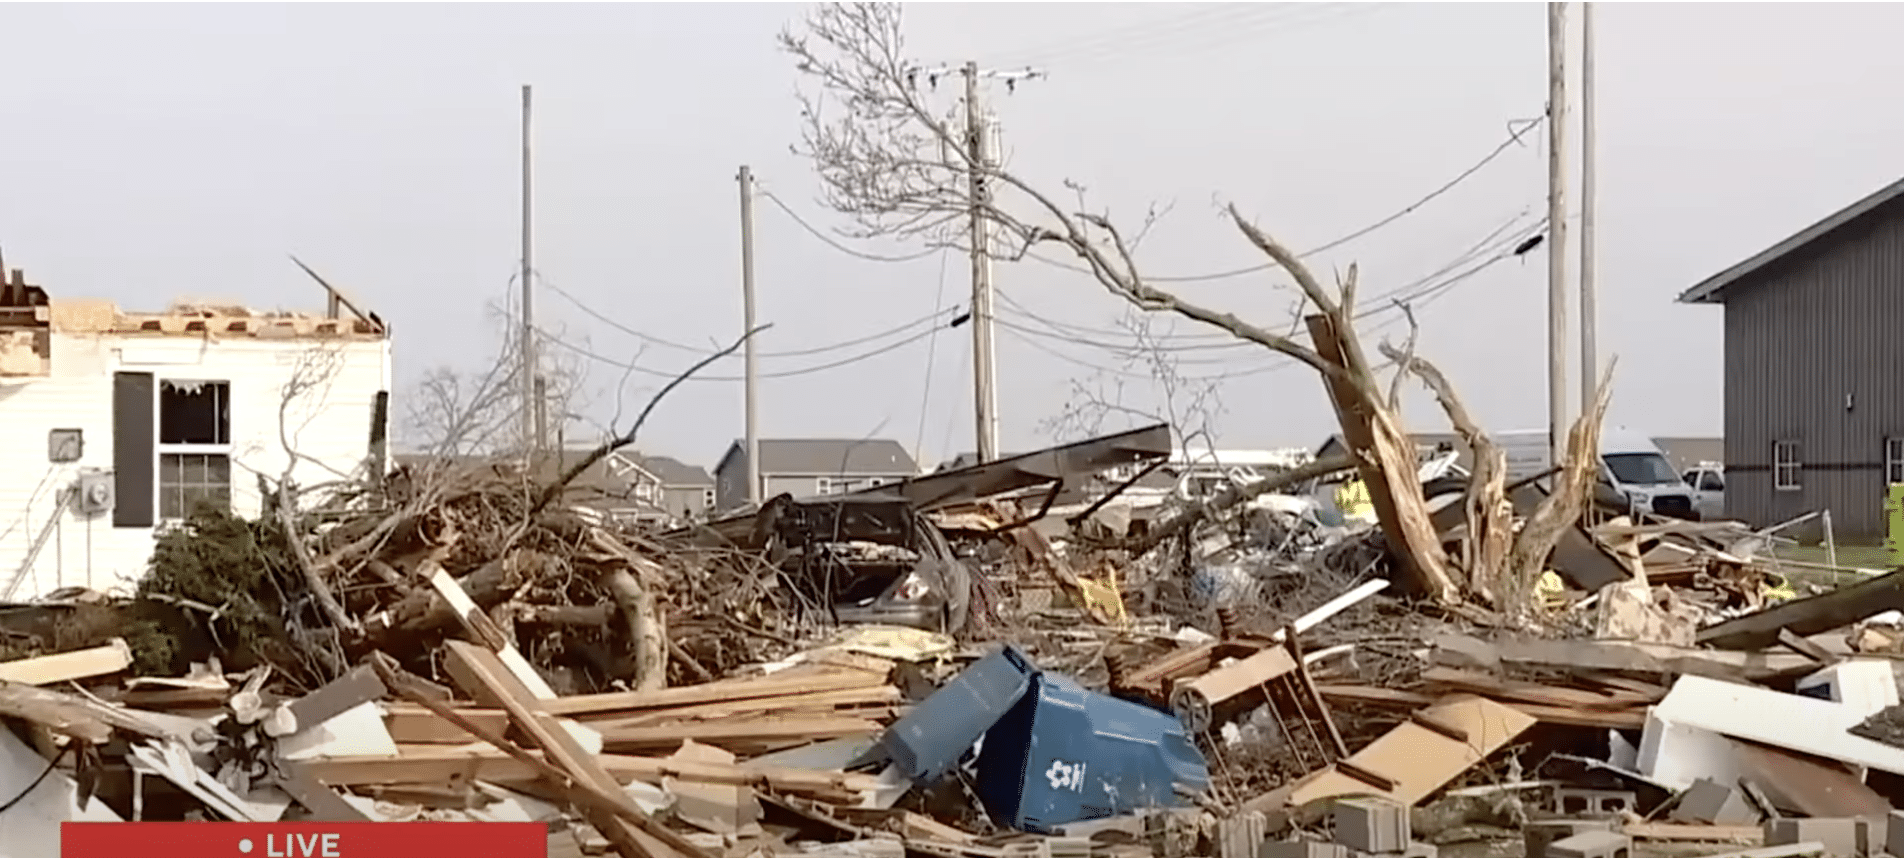 (WATCH) Missouri tornado kills at least 5 people, causing widespread damage